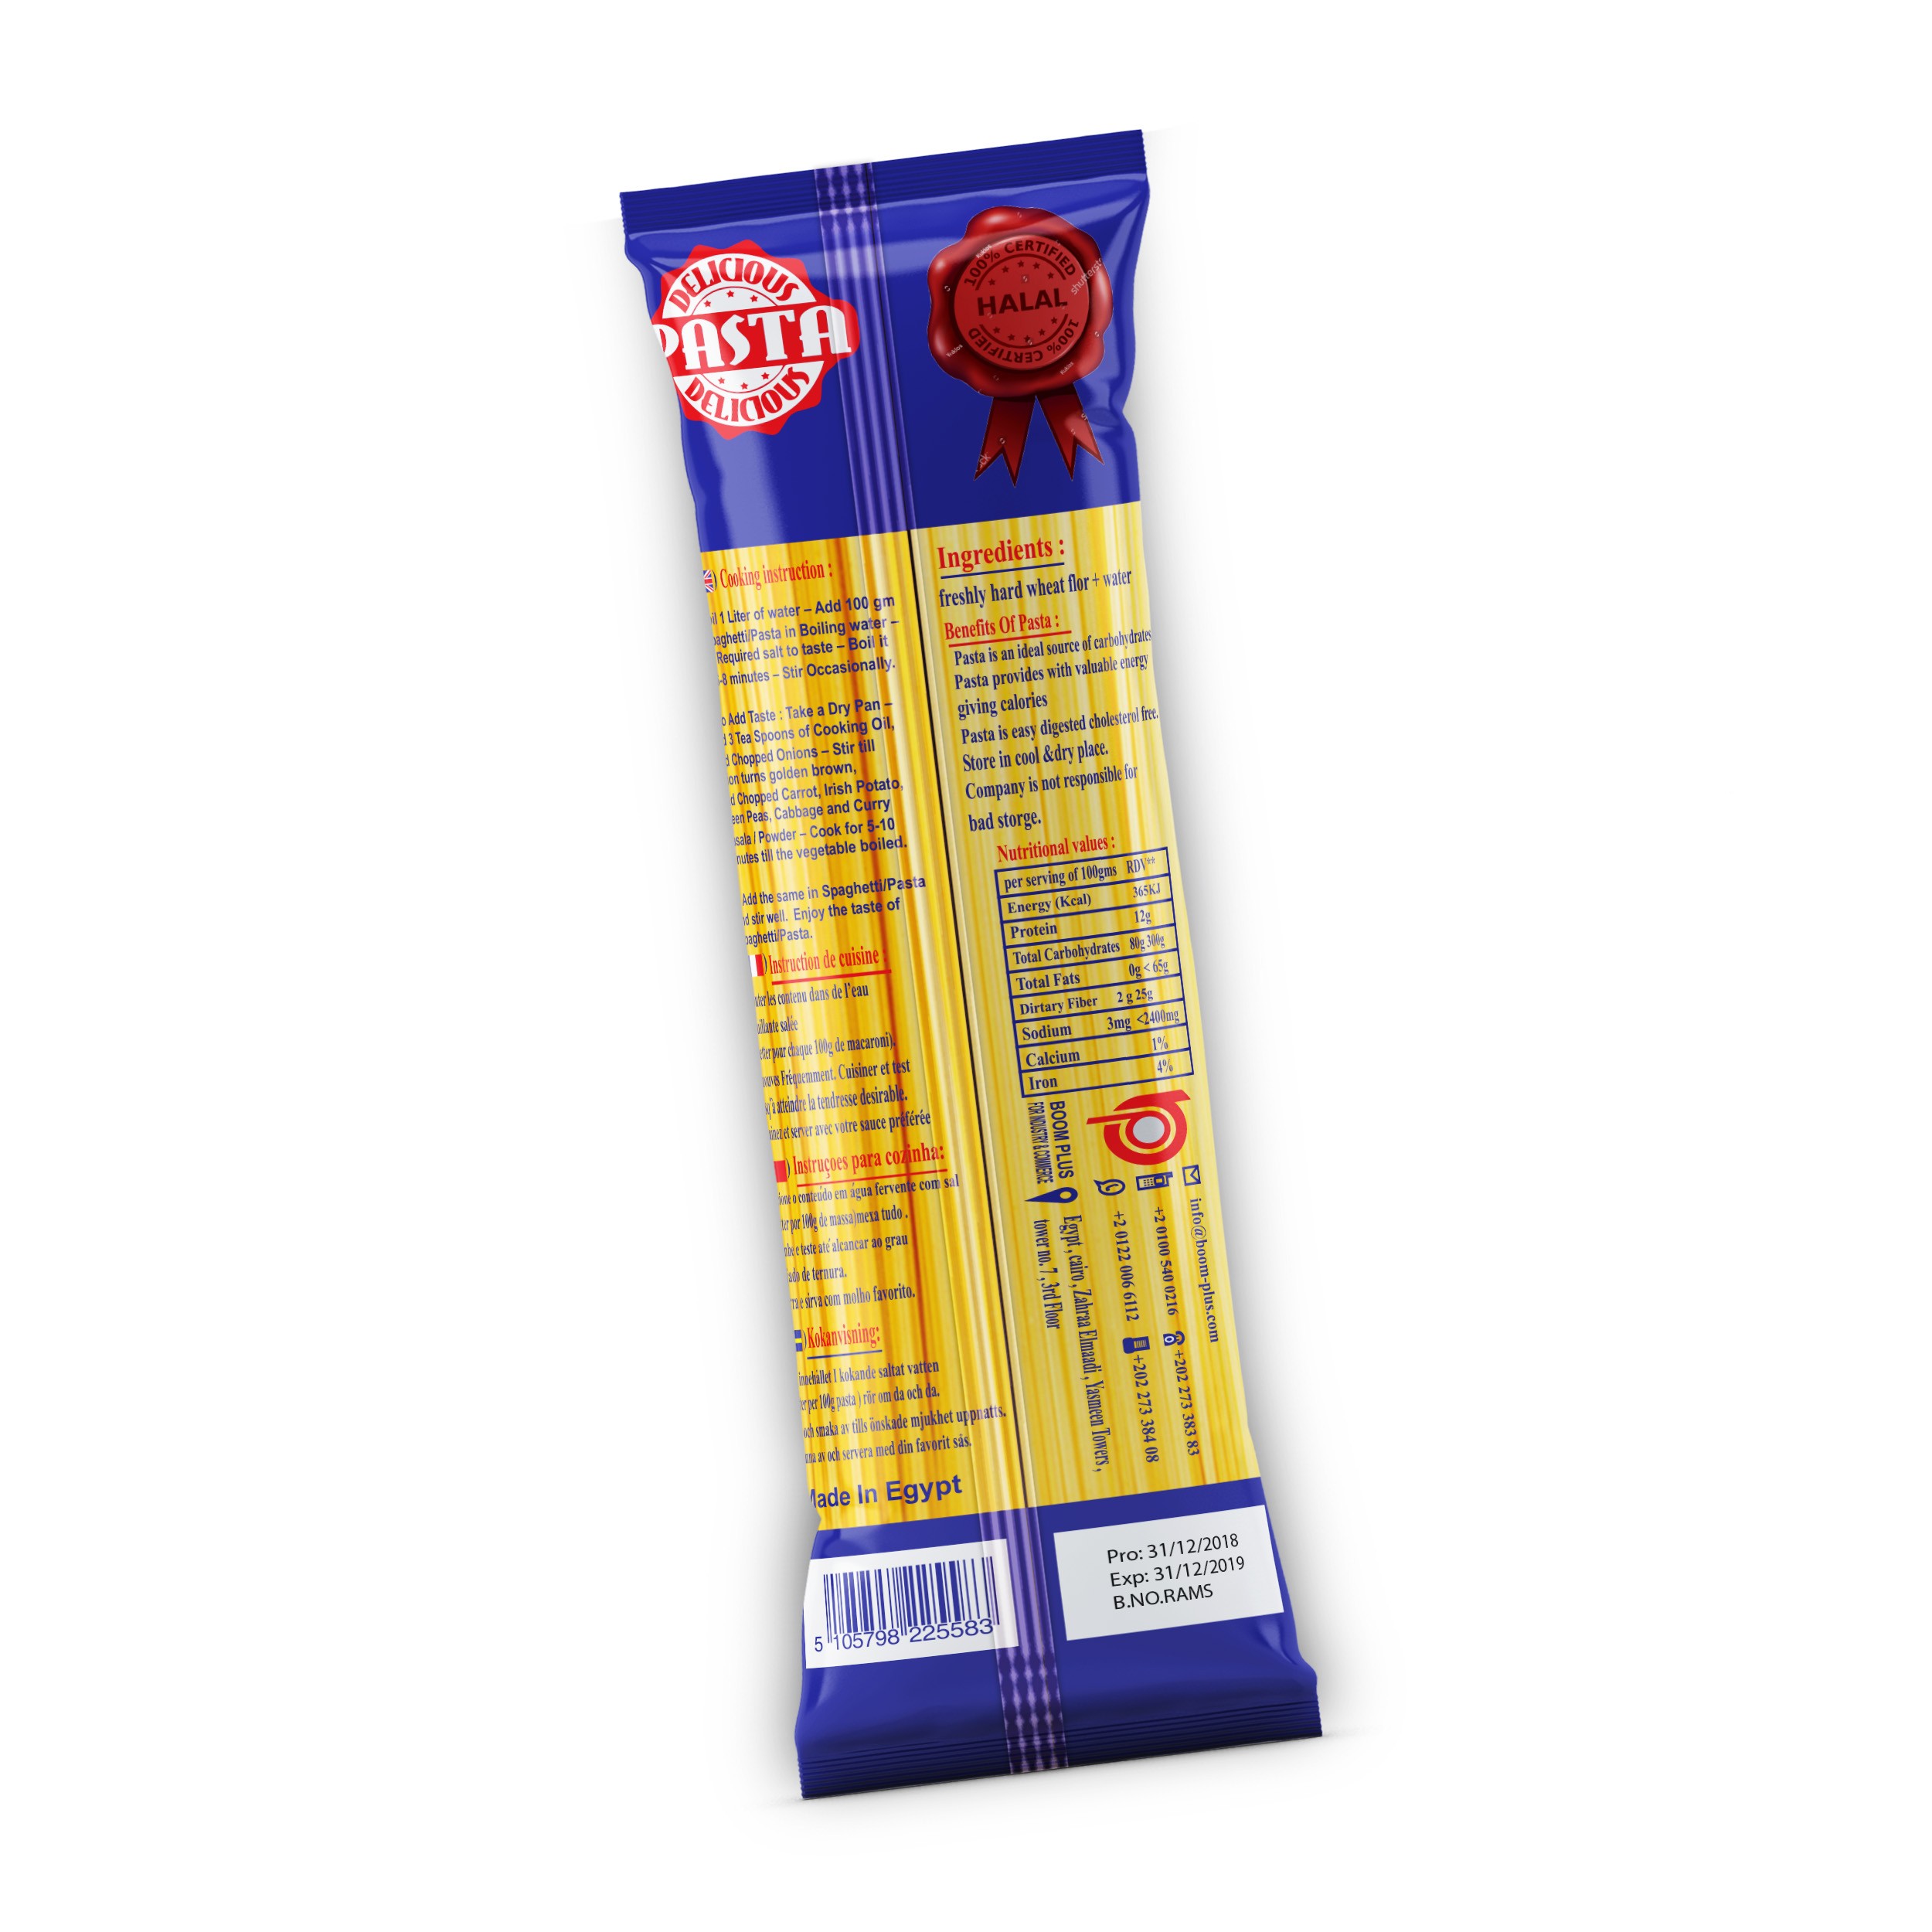 Spaghetti Dry Pasta 500 g Hard Wheat Daibah Brand Pasta made in Egypt Gluten Free bulk packages pasta